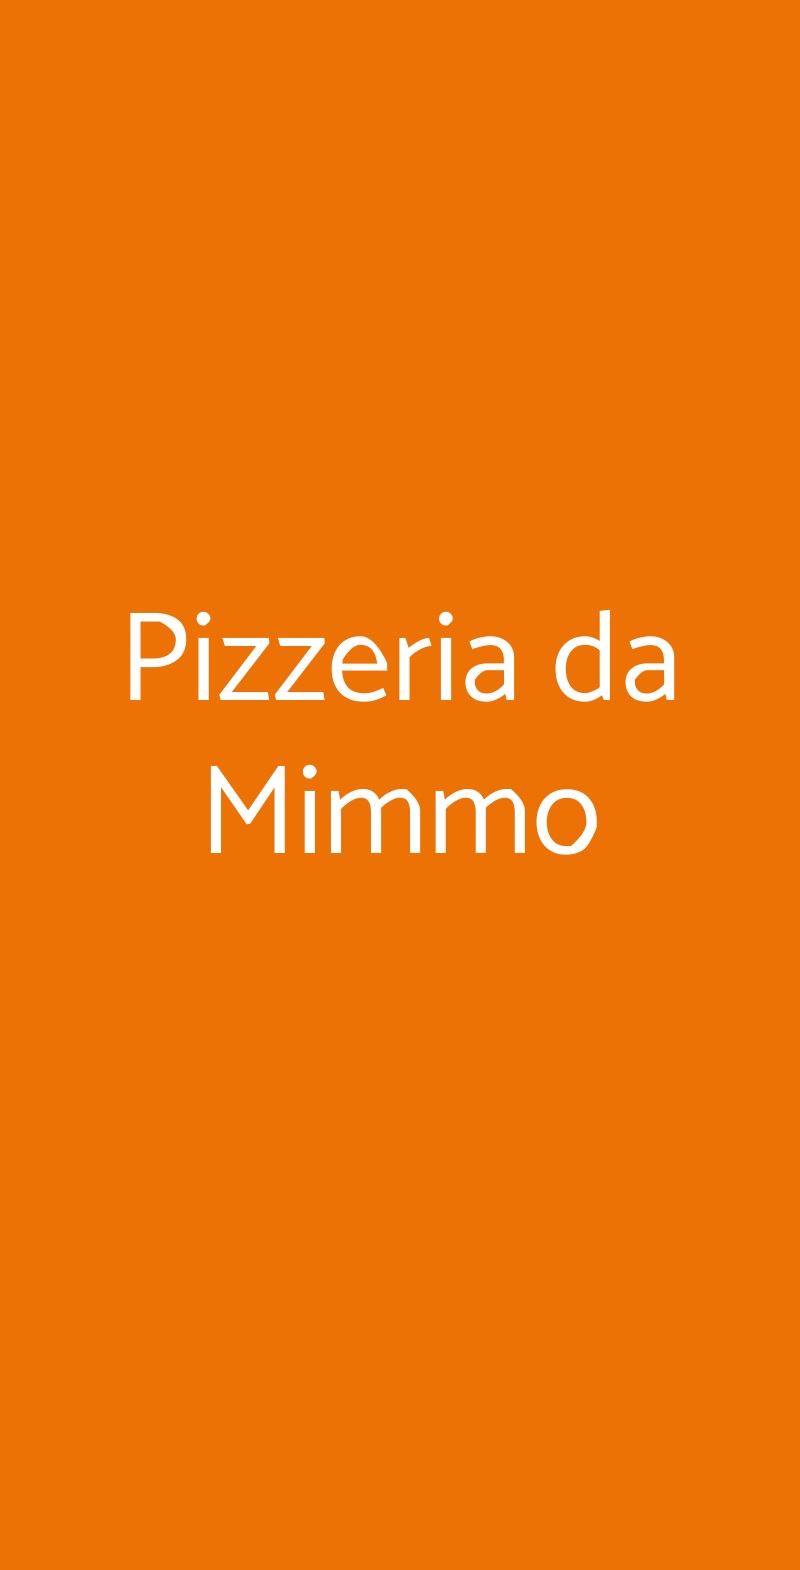 Pizzeria da Mimmo Milano menù 1 pagina